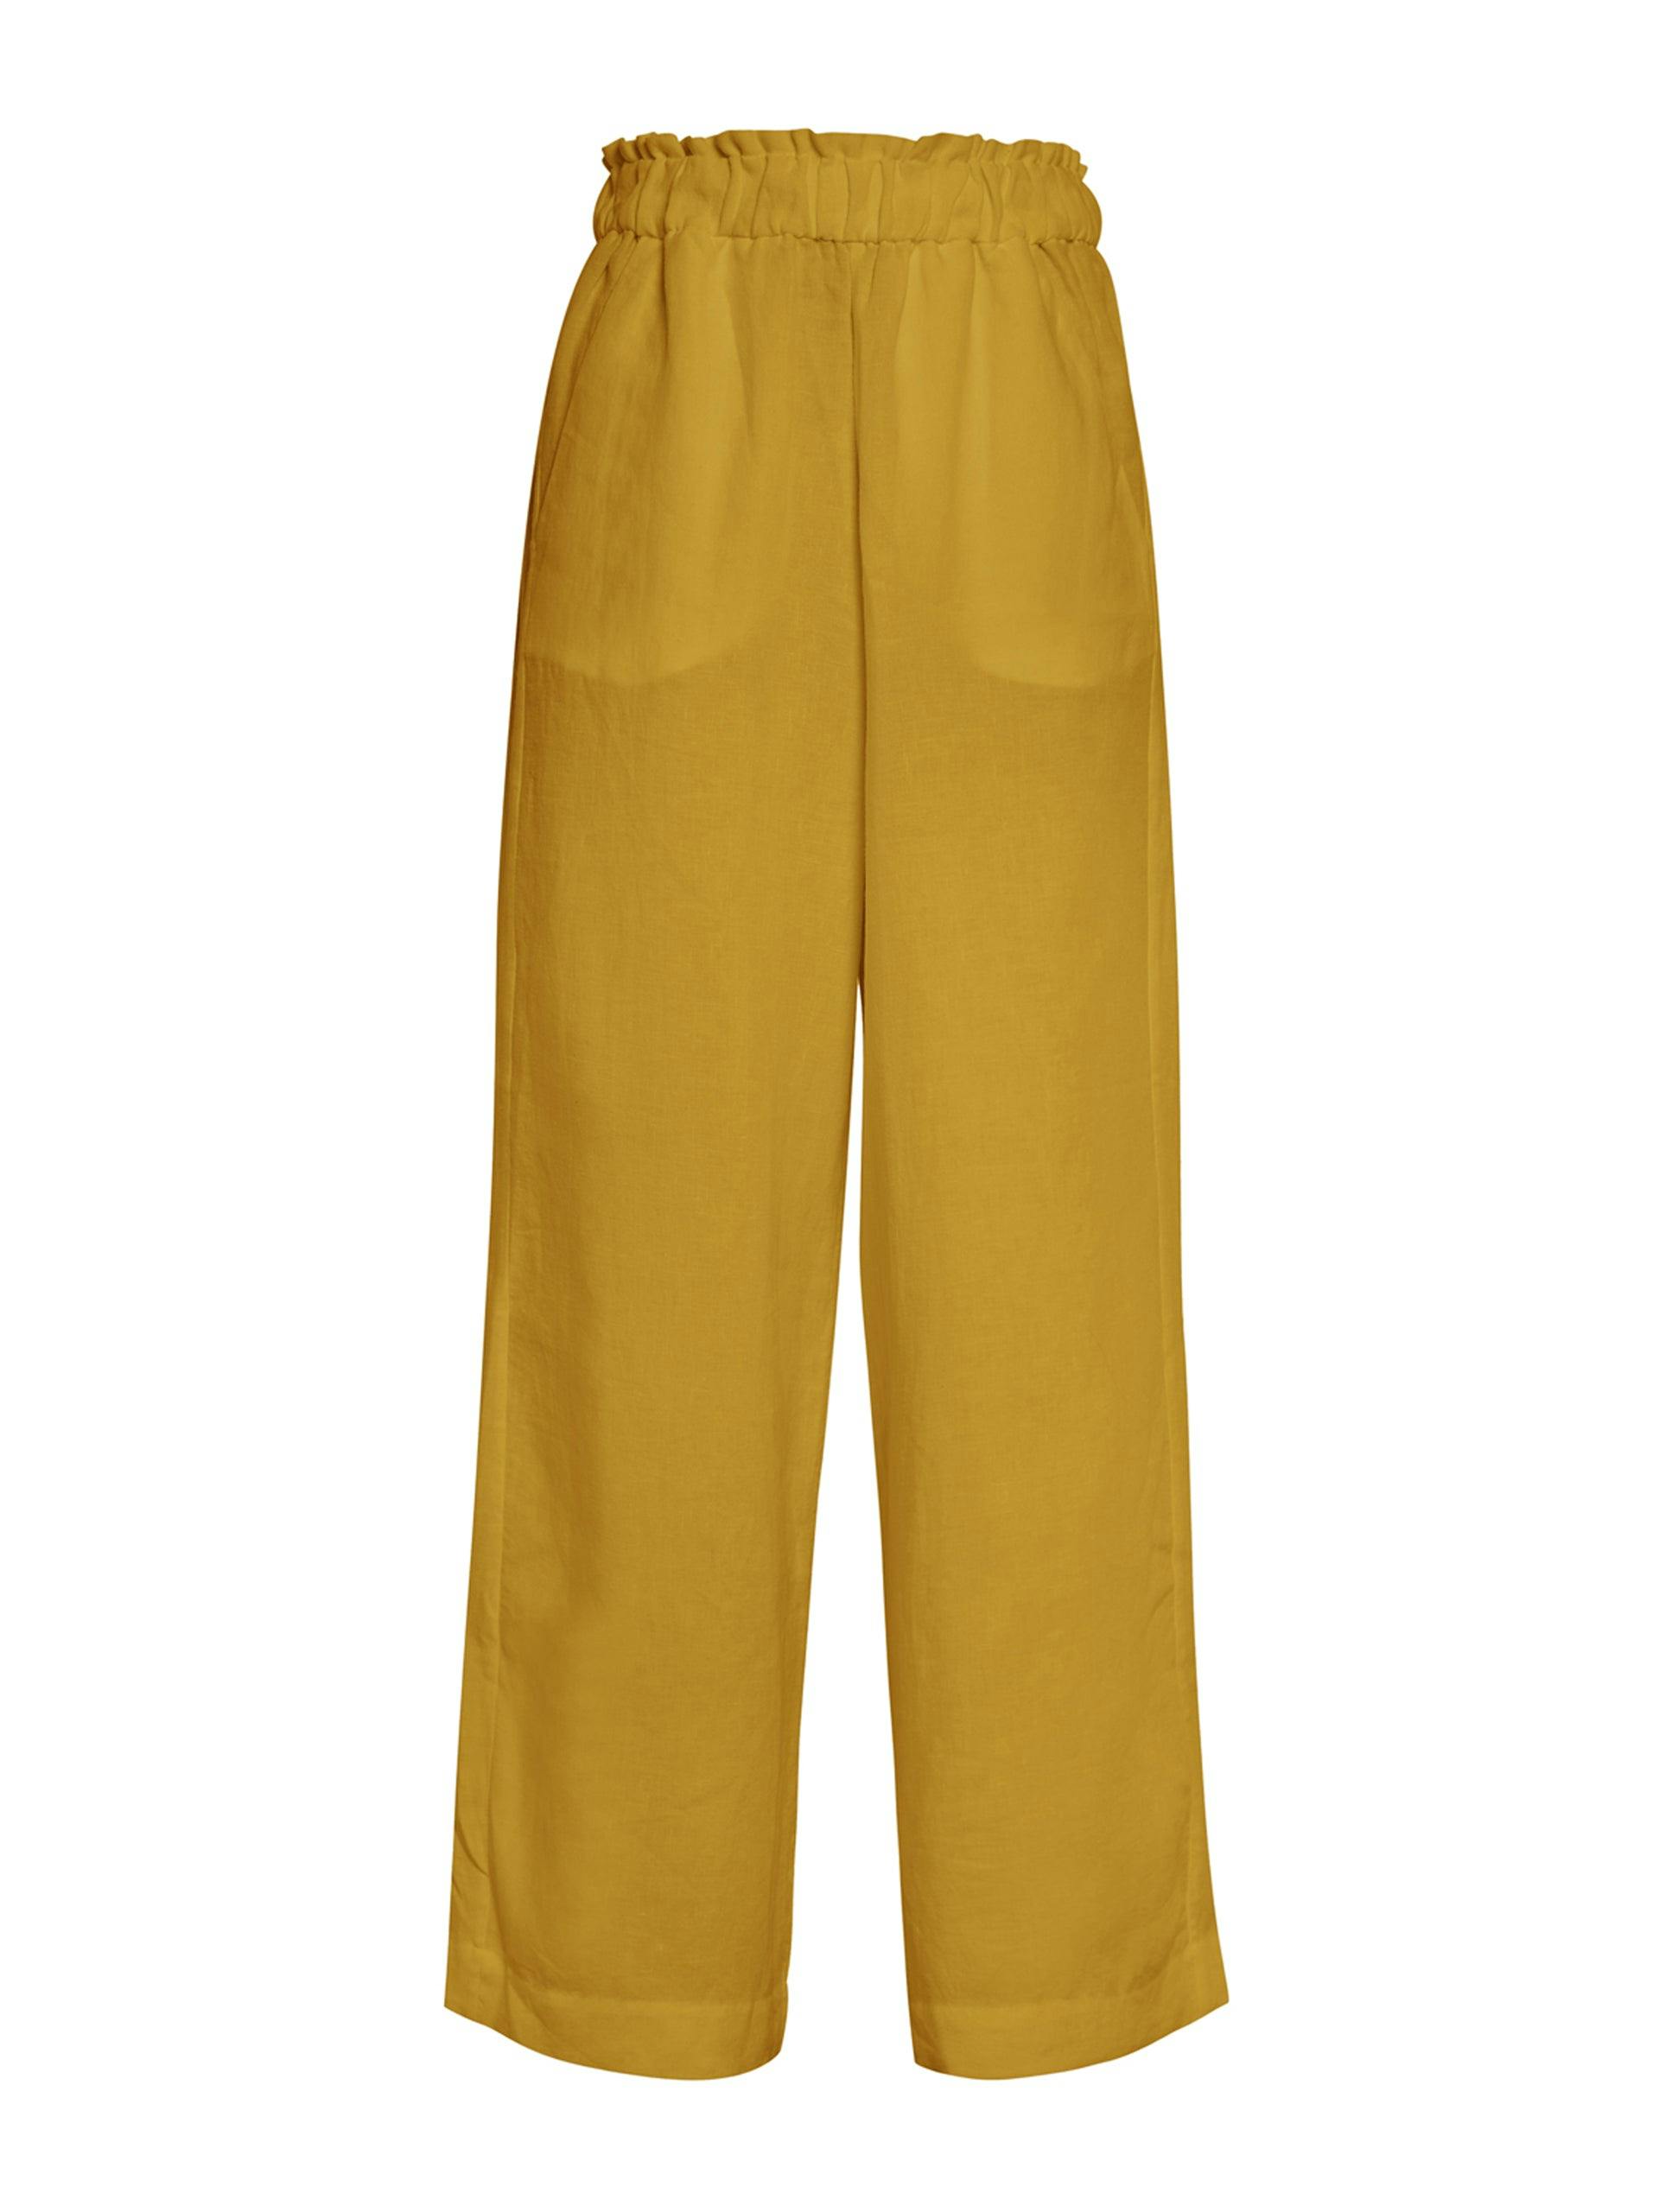 Natalia yellow linen wide-leg trousers